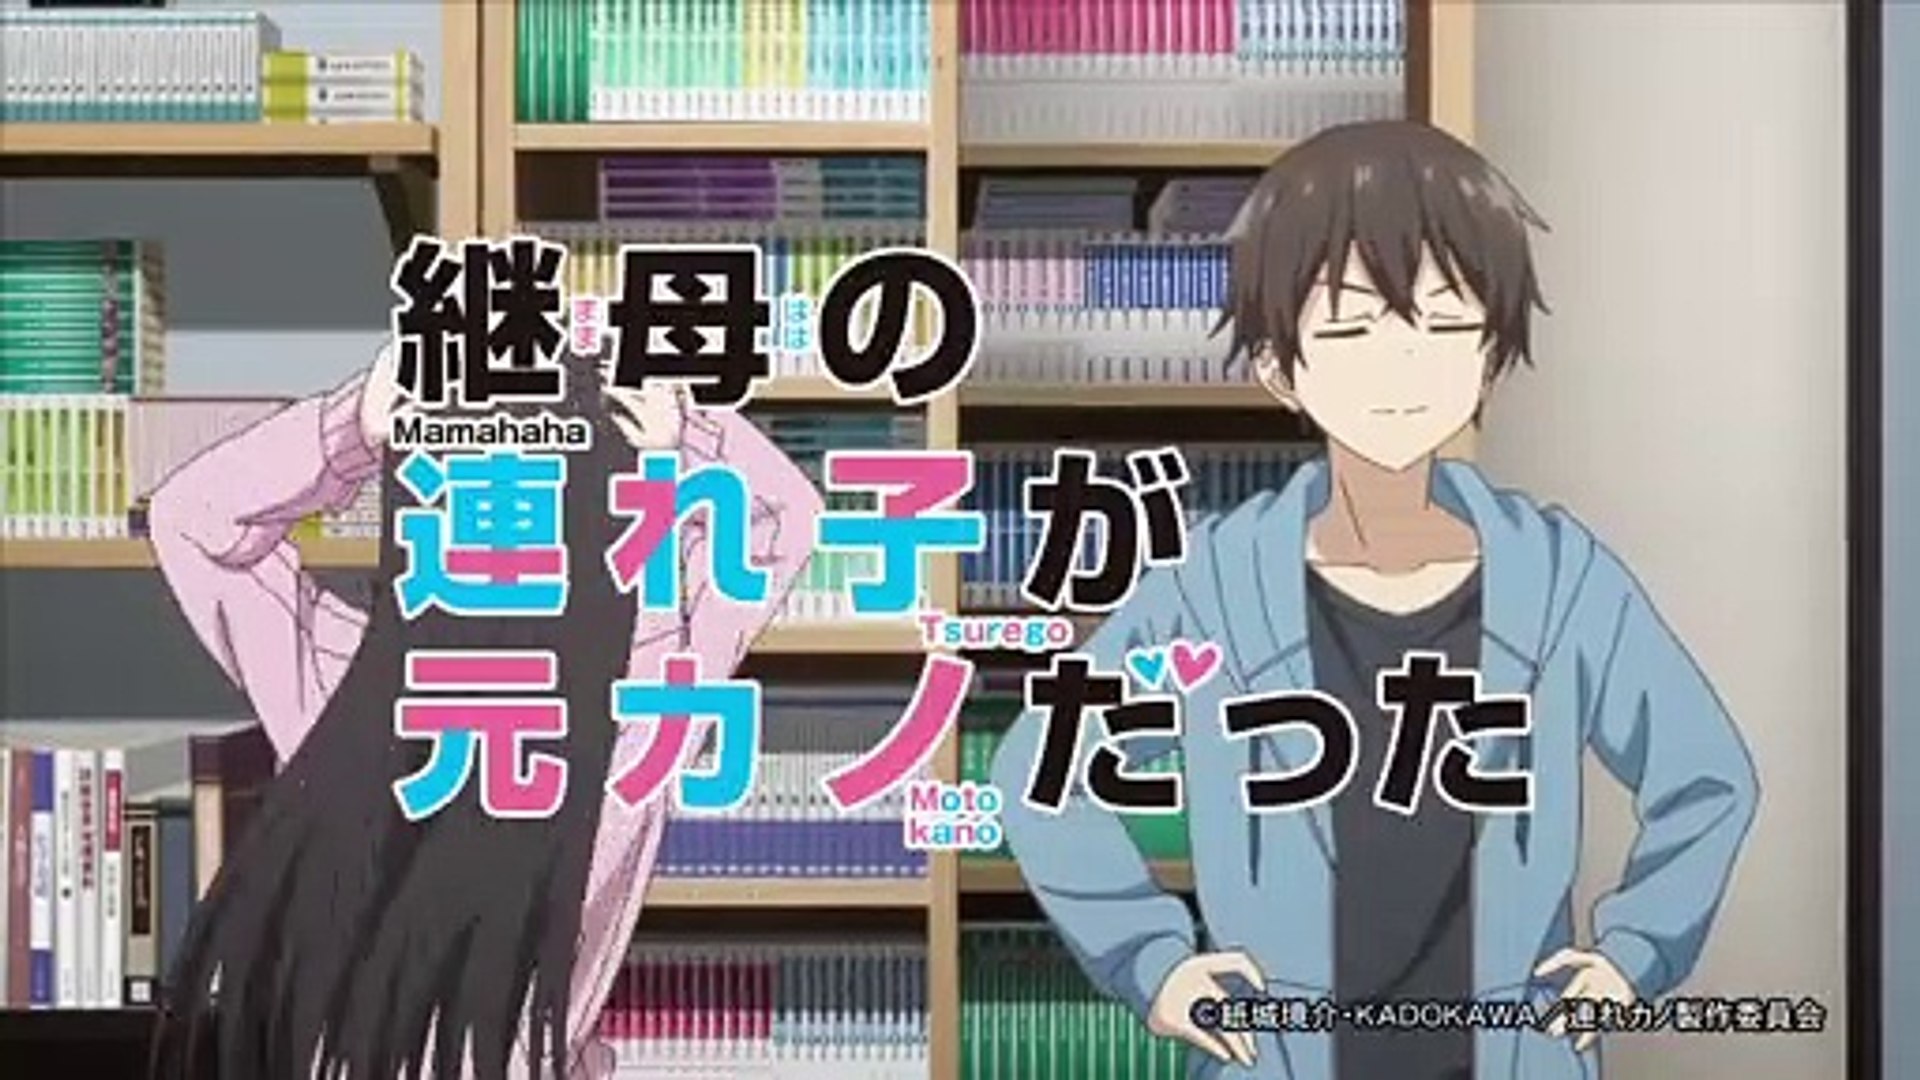 Mamahaha no Tsurego ga Motokano Datta TV Anime Slated for July